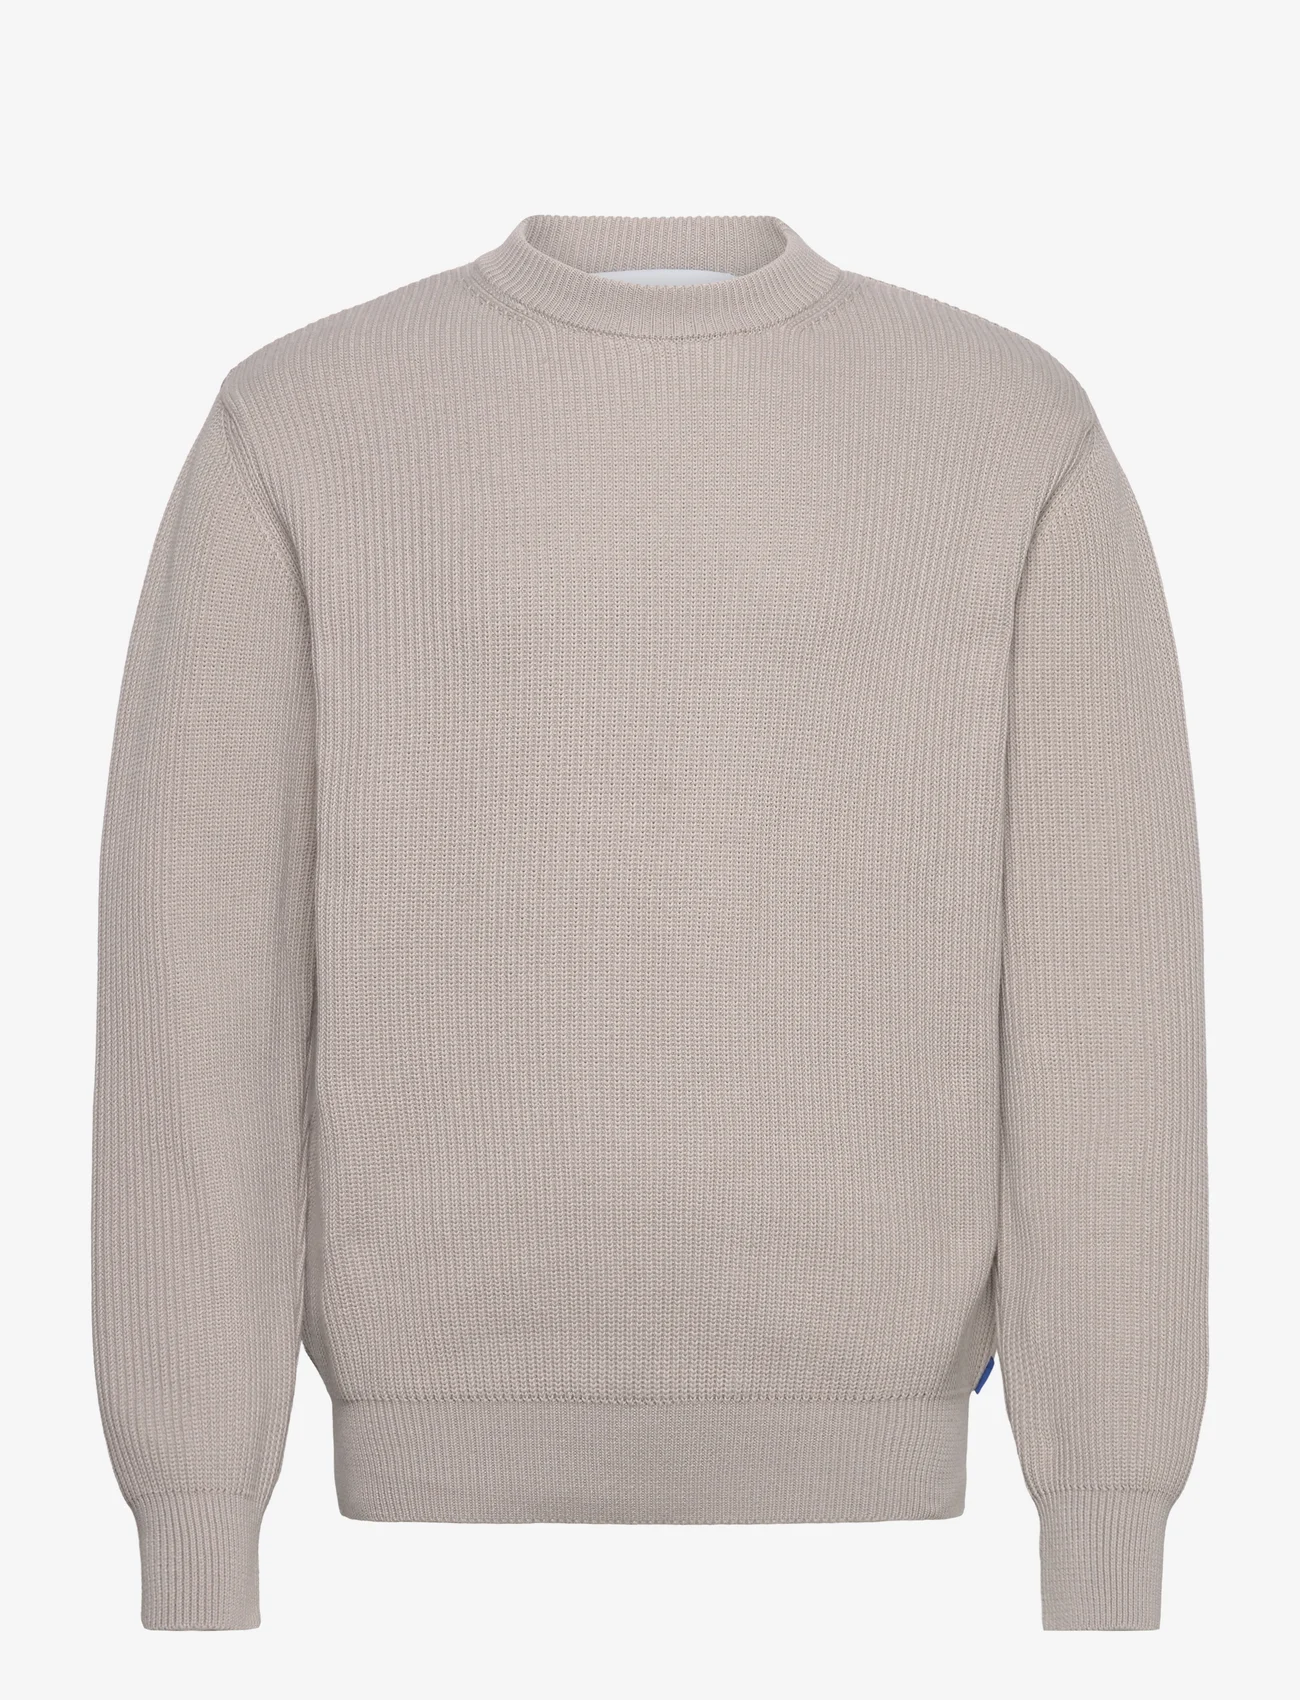 Garment Project - Round Neck Knit - Light Grey - knitted round necks - light grey - 0